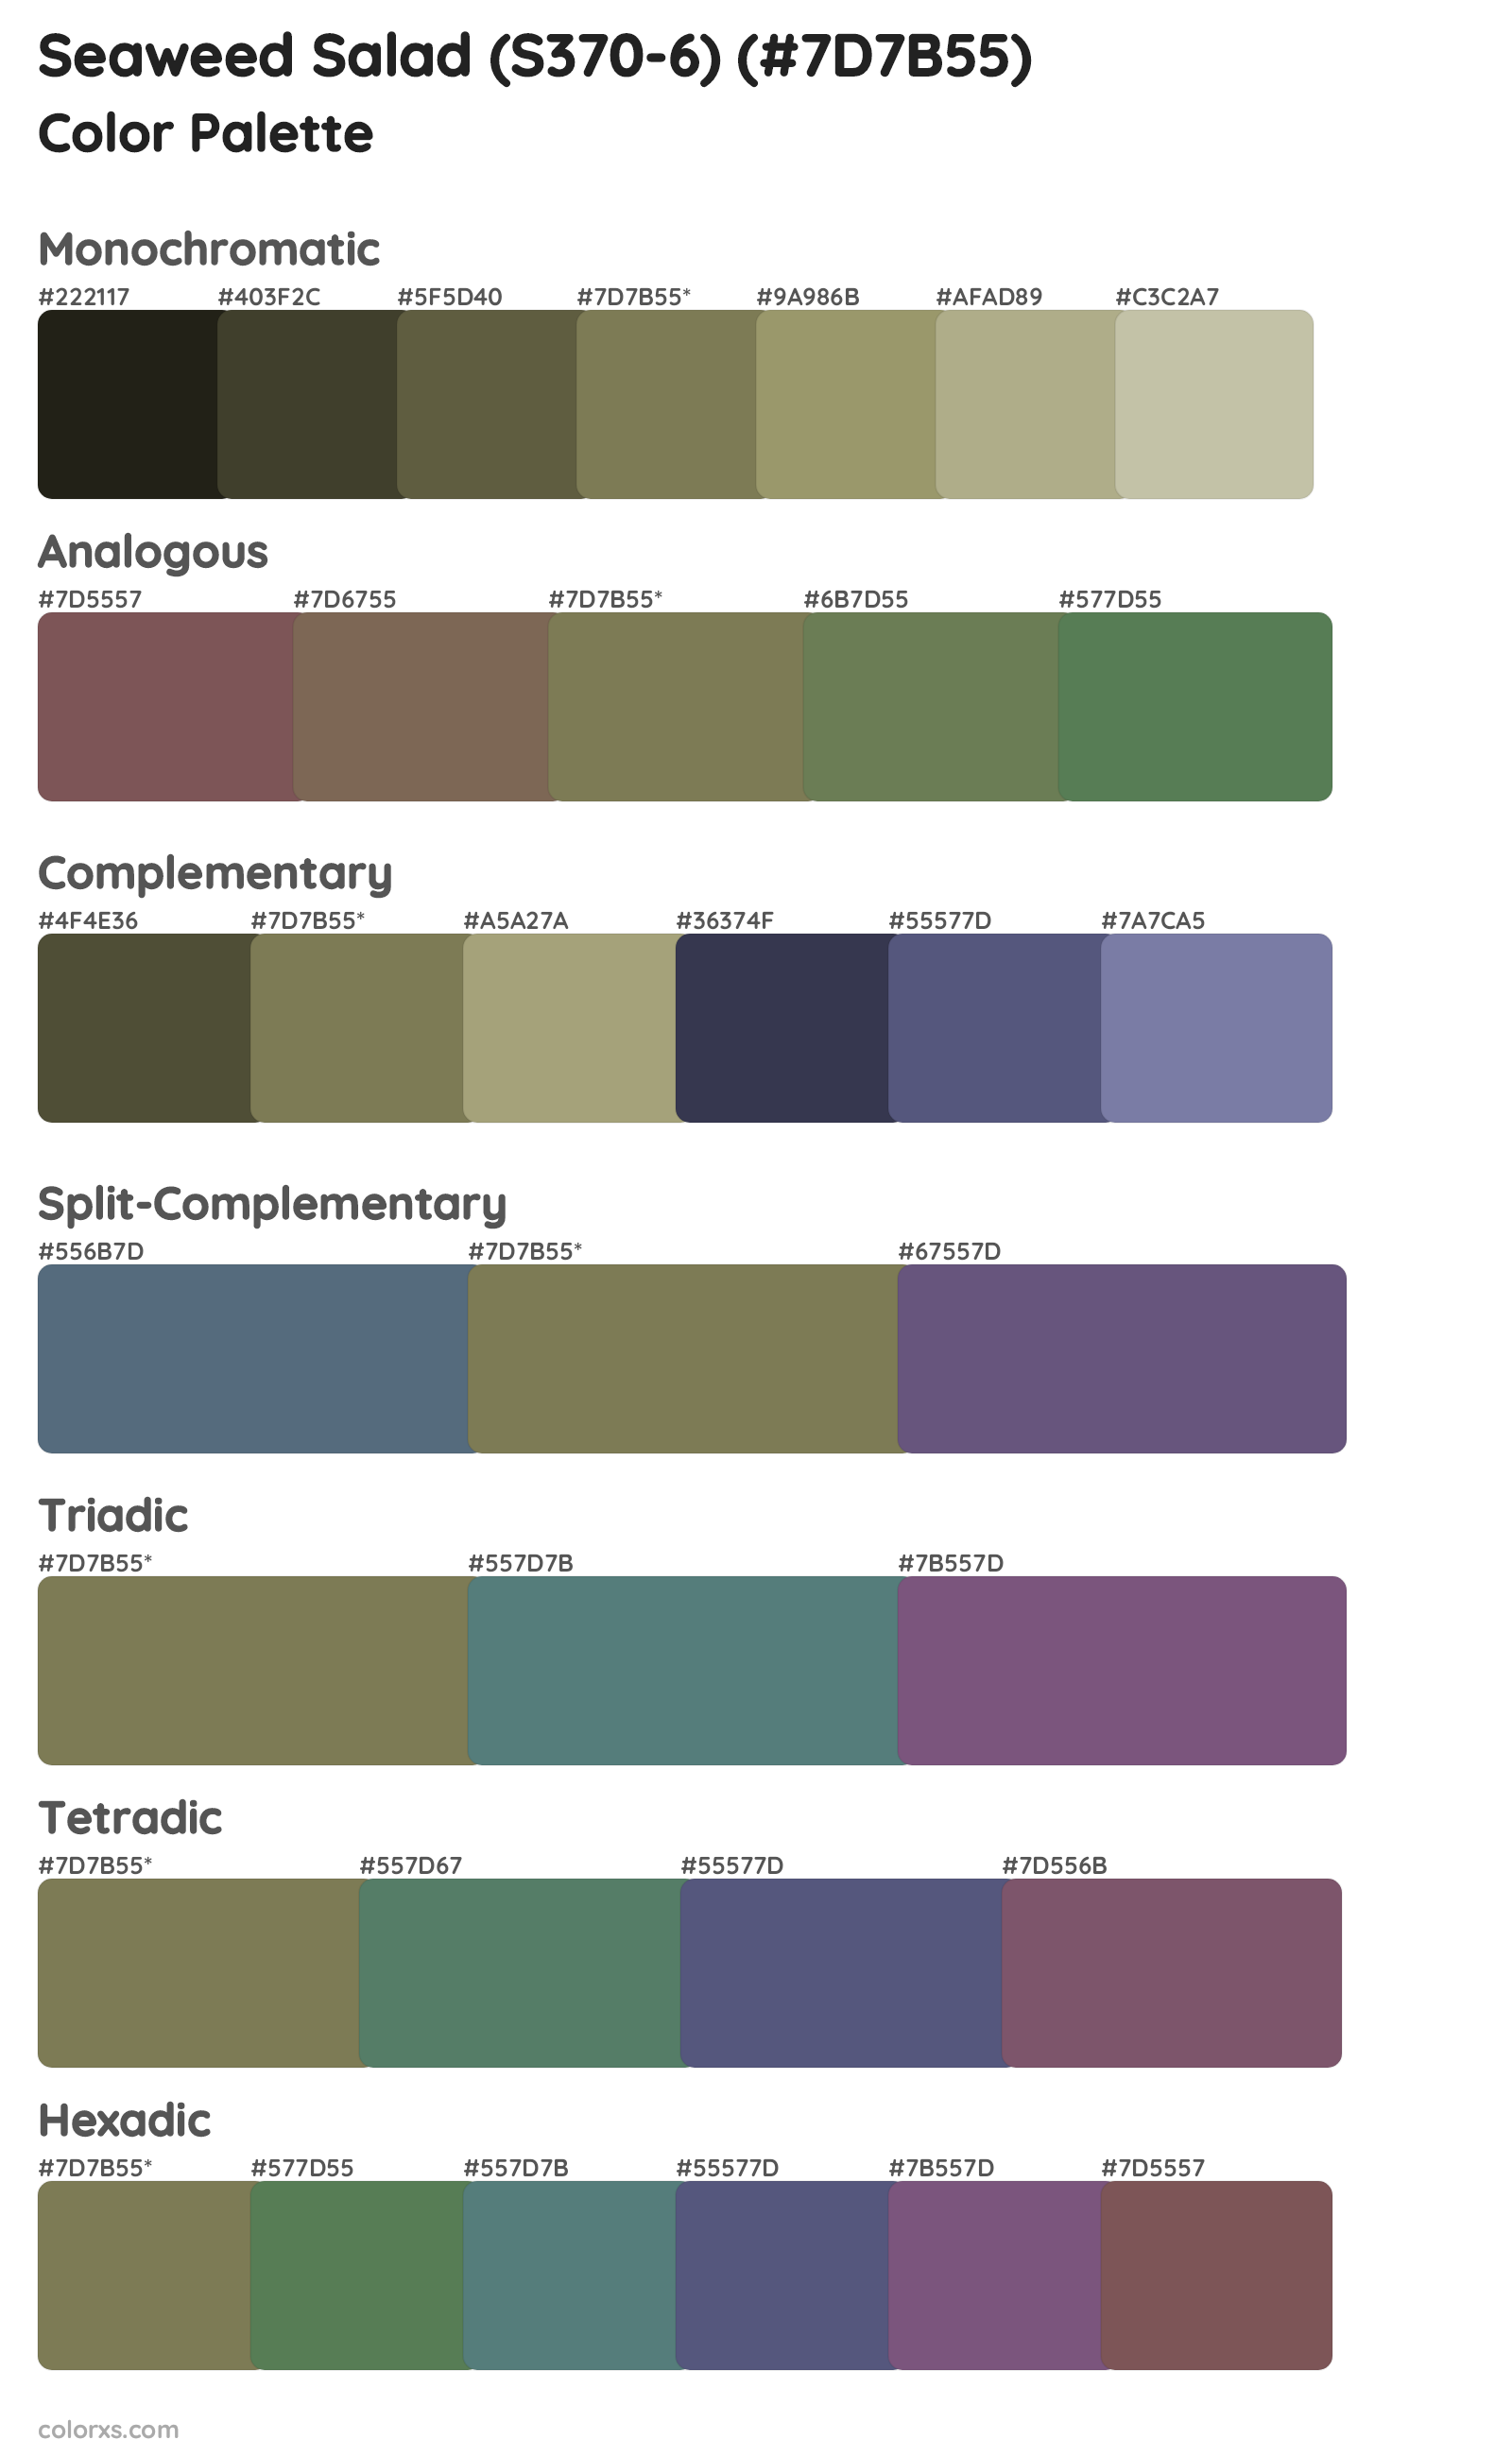 Seaweed Salad (S370-6) Color Scheme Palettes